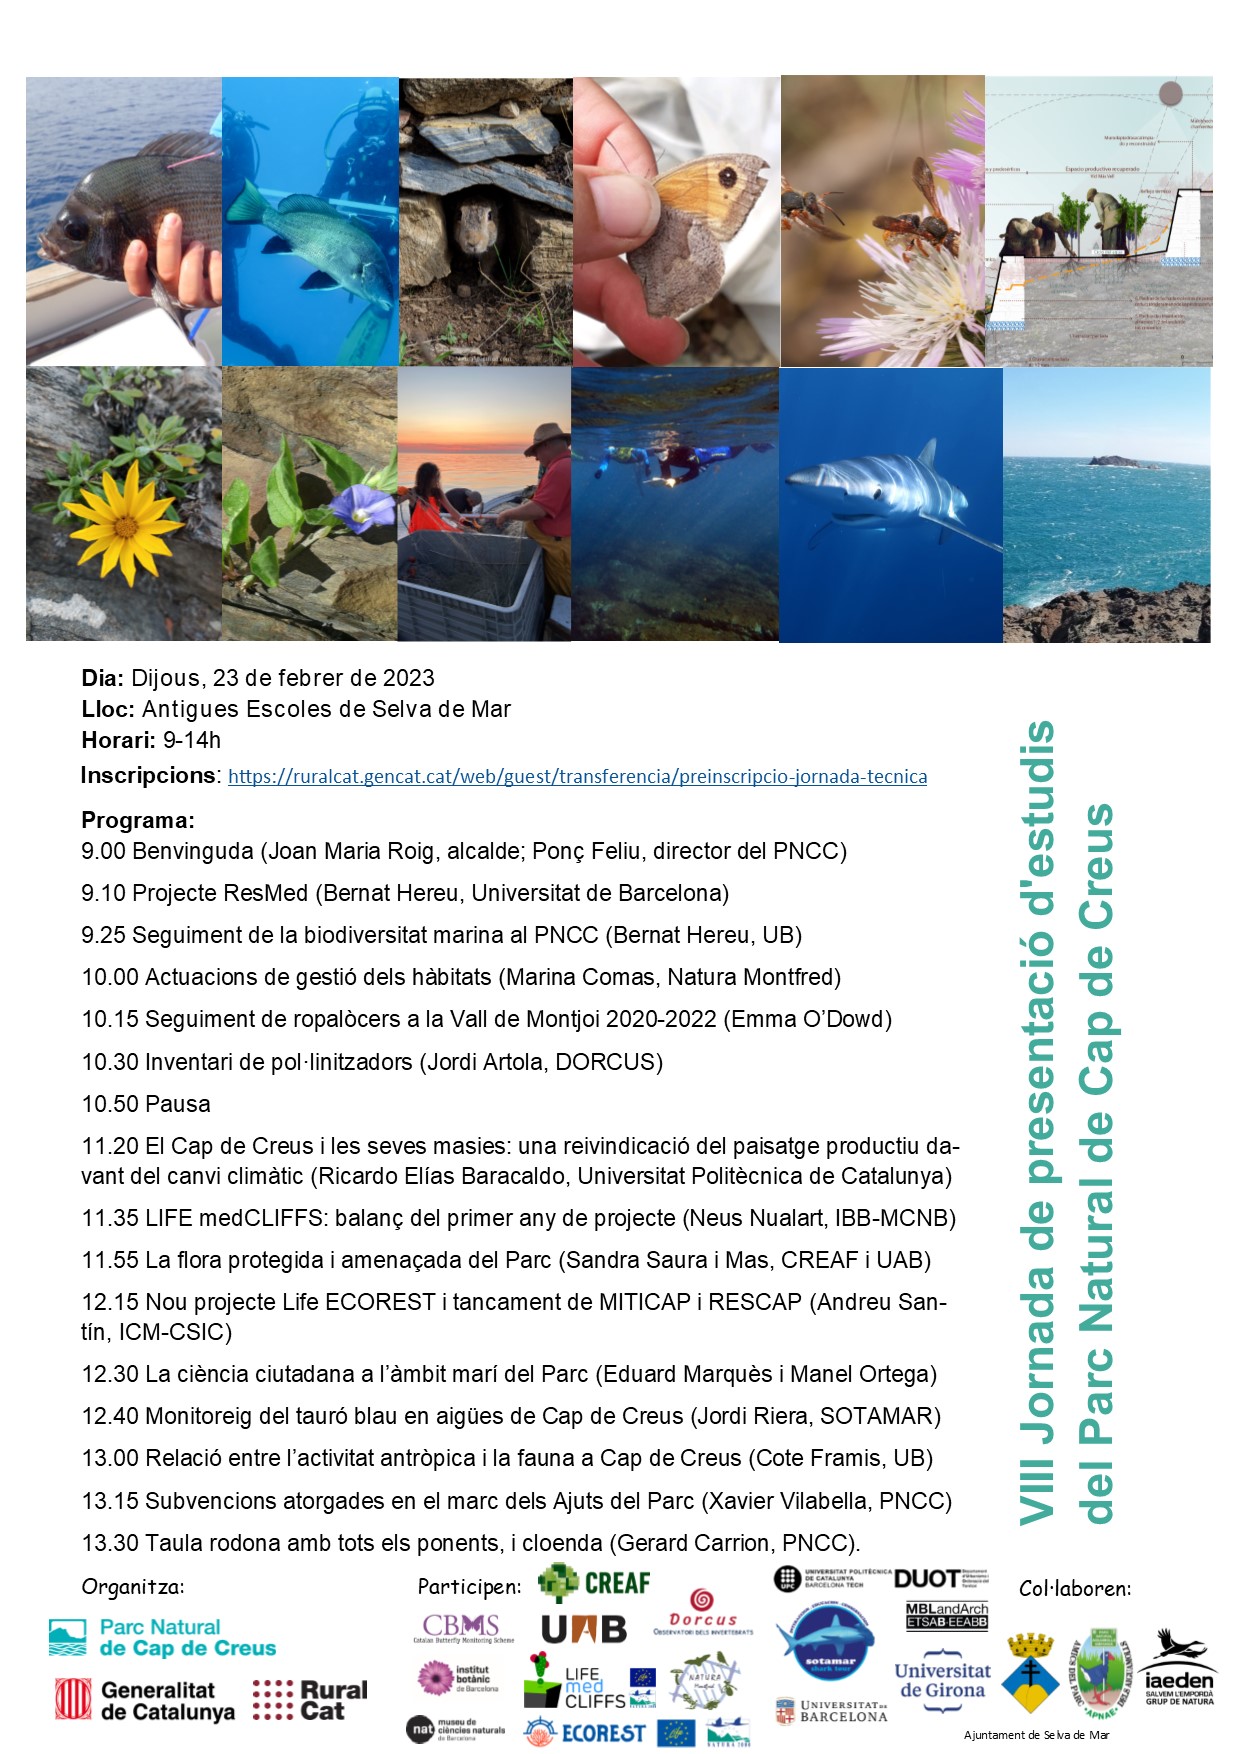 Sotamar Shark Tour participará en la VIII Jornada de presentación de estudios del Parque Natural de 